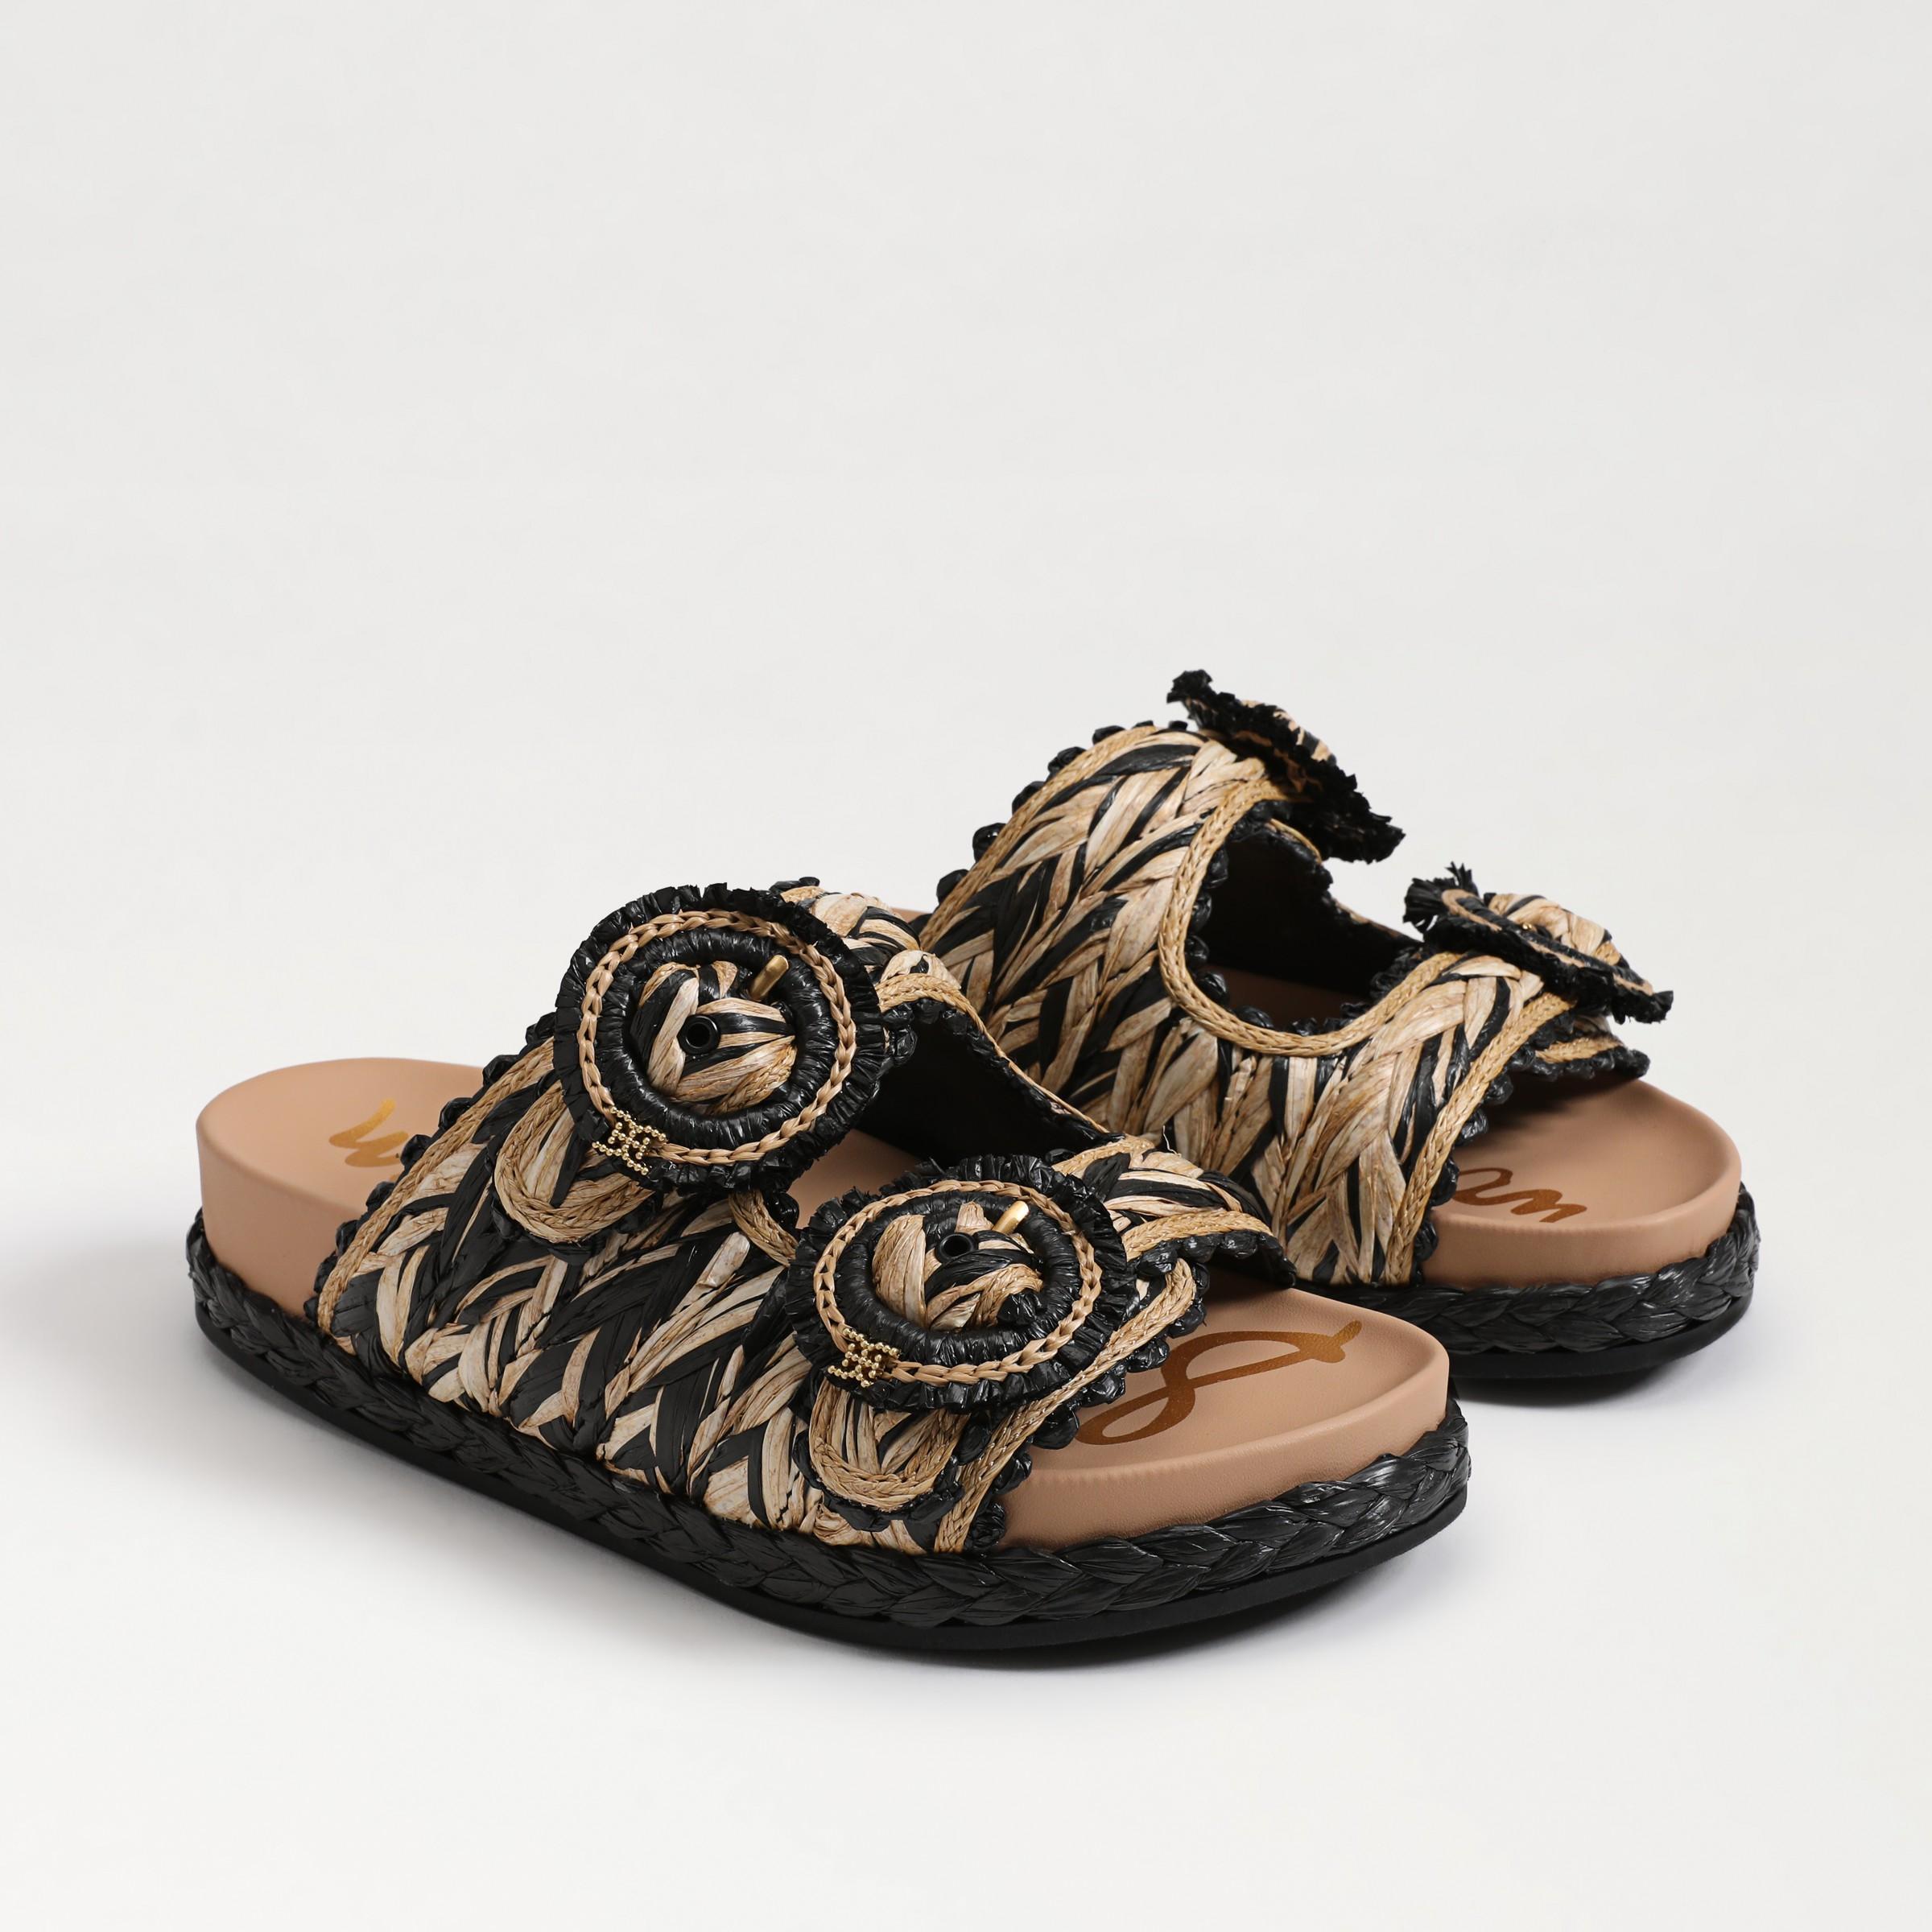 Sam Edelman Reina Braided Platform Sandal Black/Natural Raffia Product Image